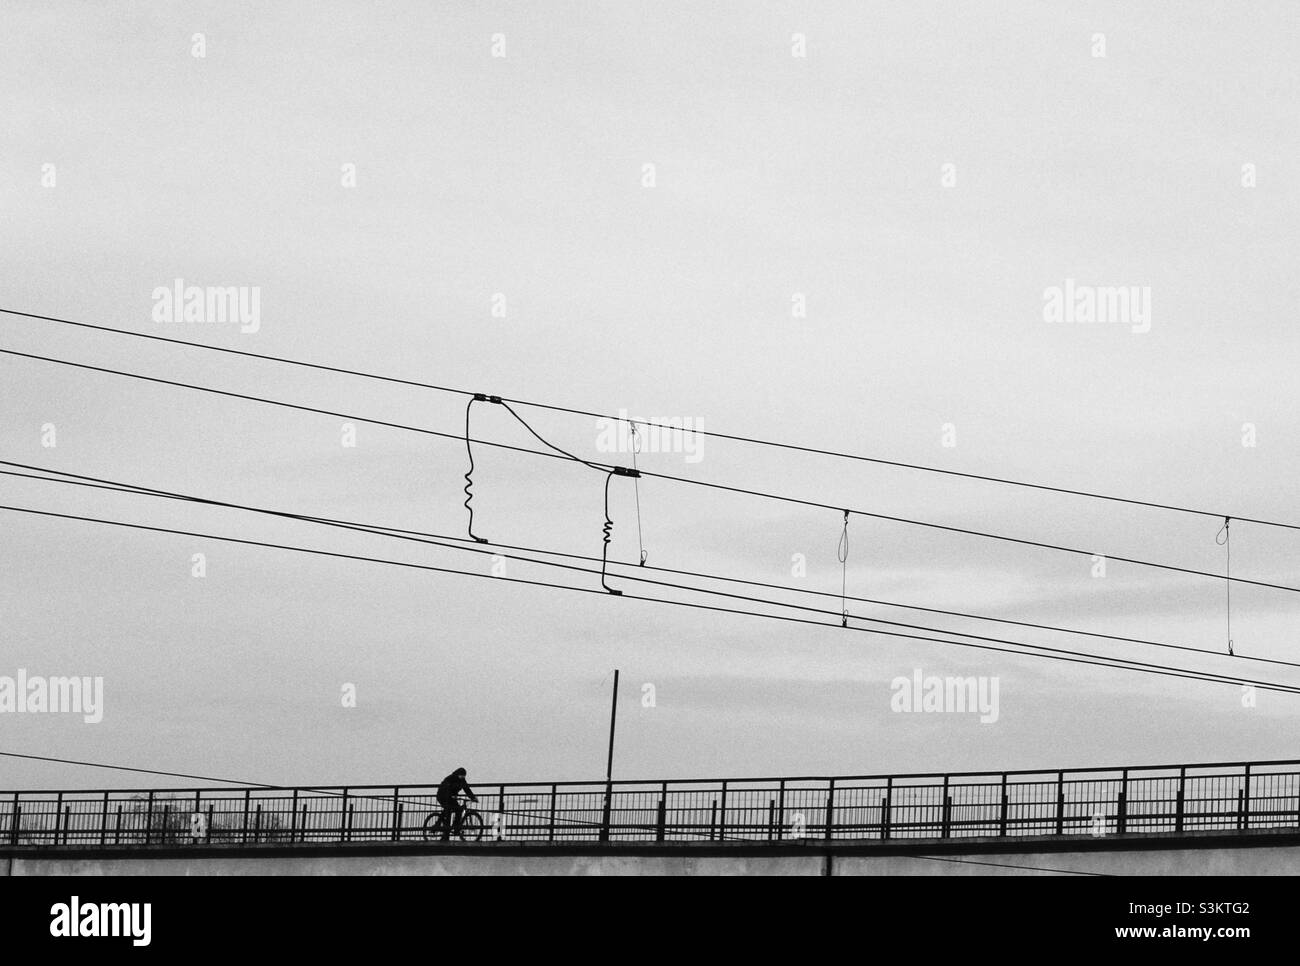 Crossing the bridge on the bicycle Stock Photo